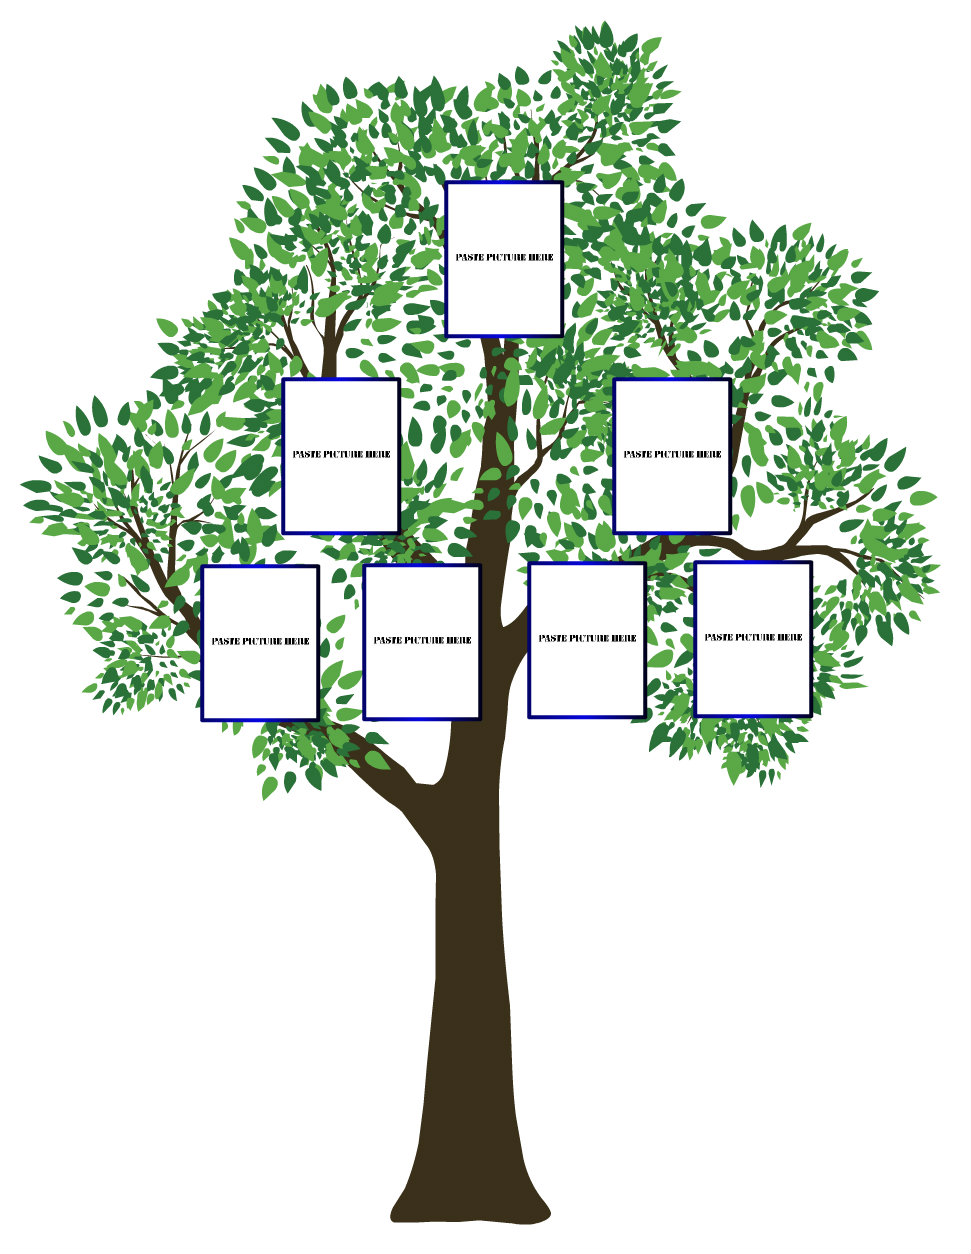 Three Generation Family Tree Templates Images - Cliparts.co Throughout Blank Family Tree Template 3 Generations